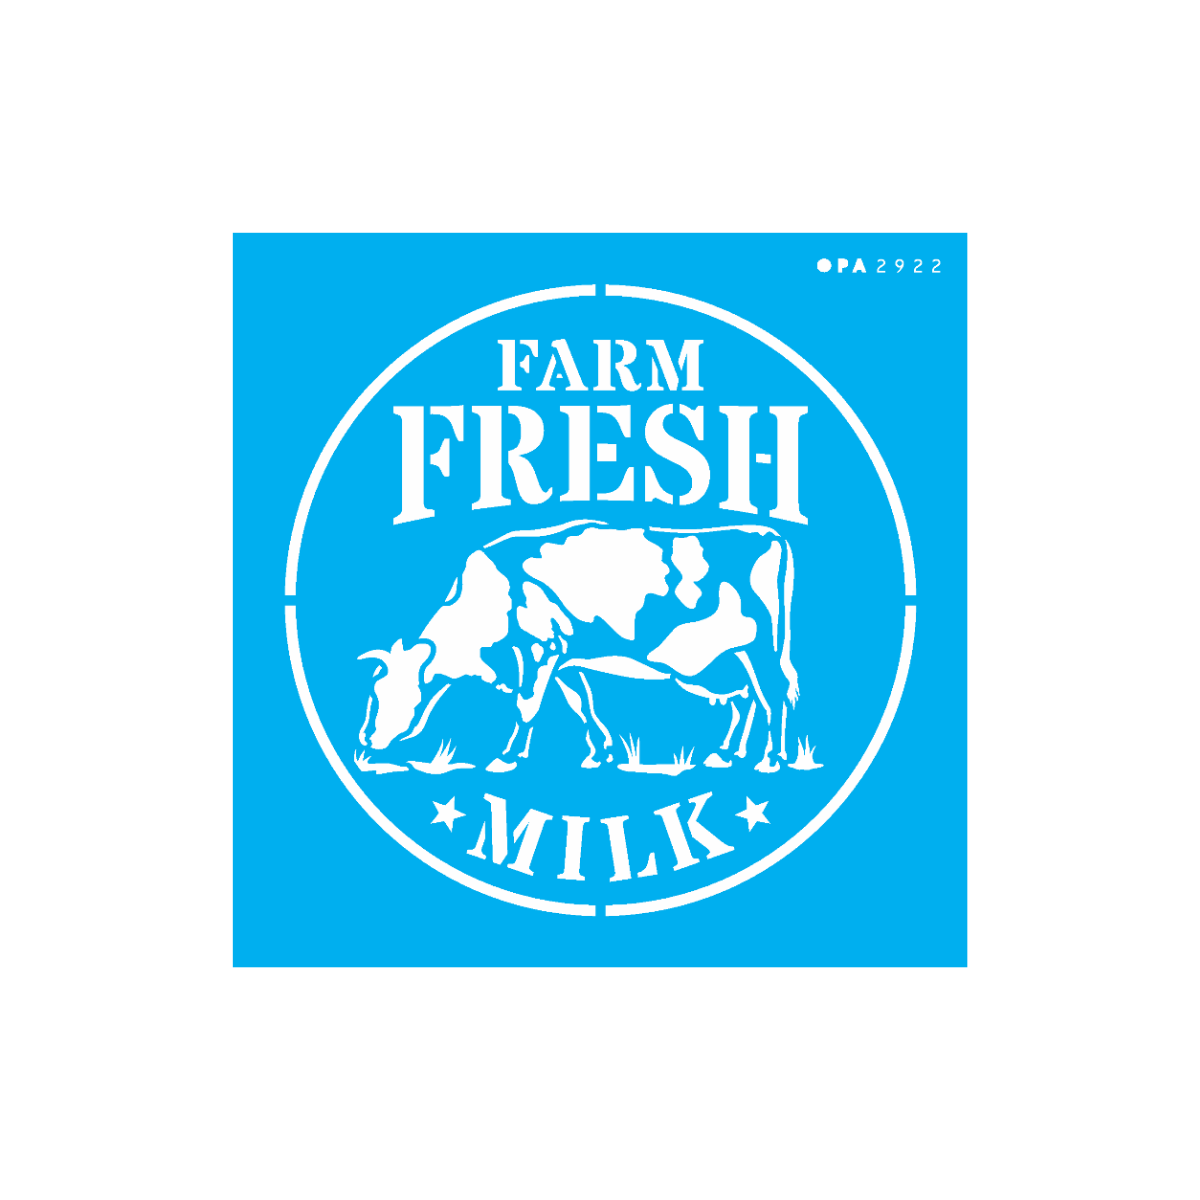 Stencil Opa 14x14cm FarmHouse Fresh Milk Opa2922